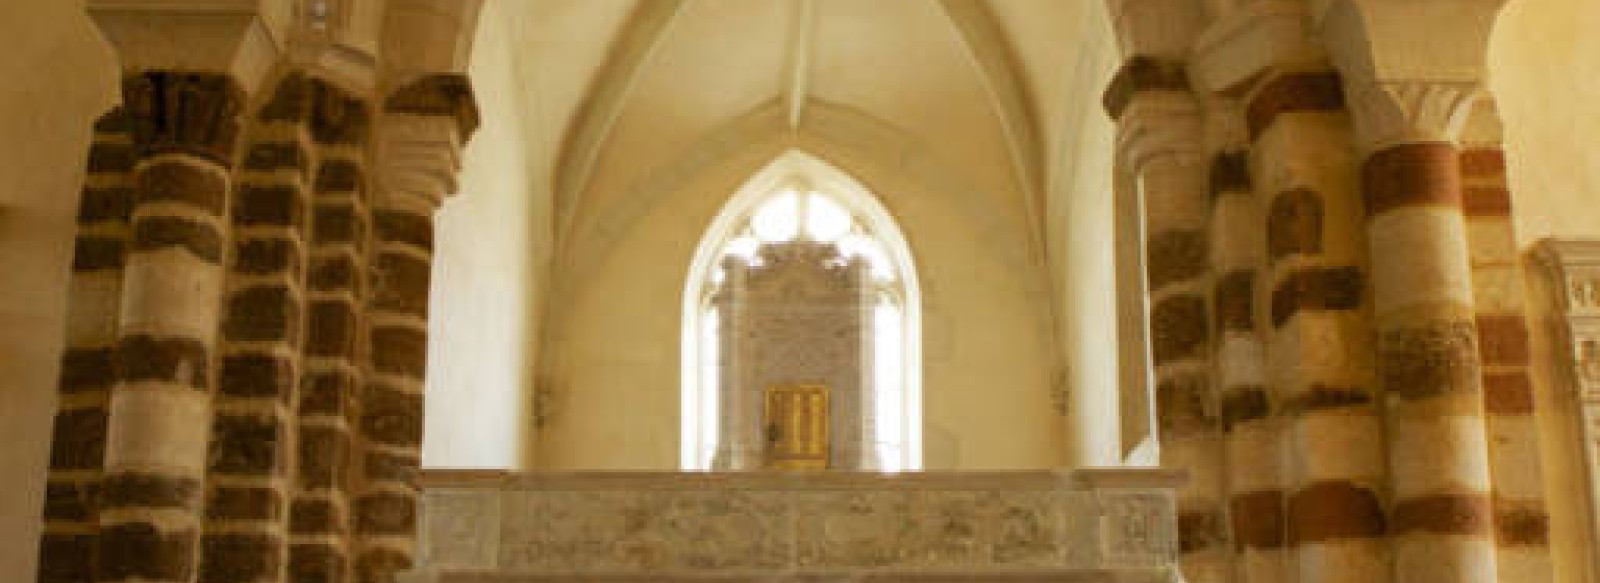 Eglise de Saint Christophe en Champagne